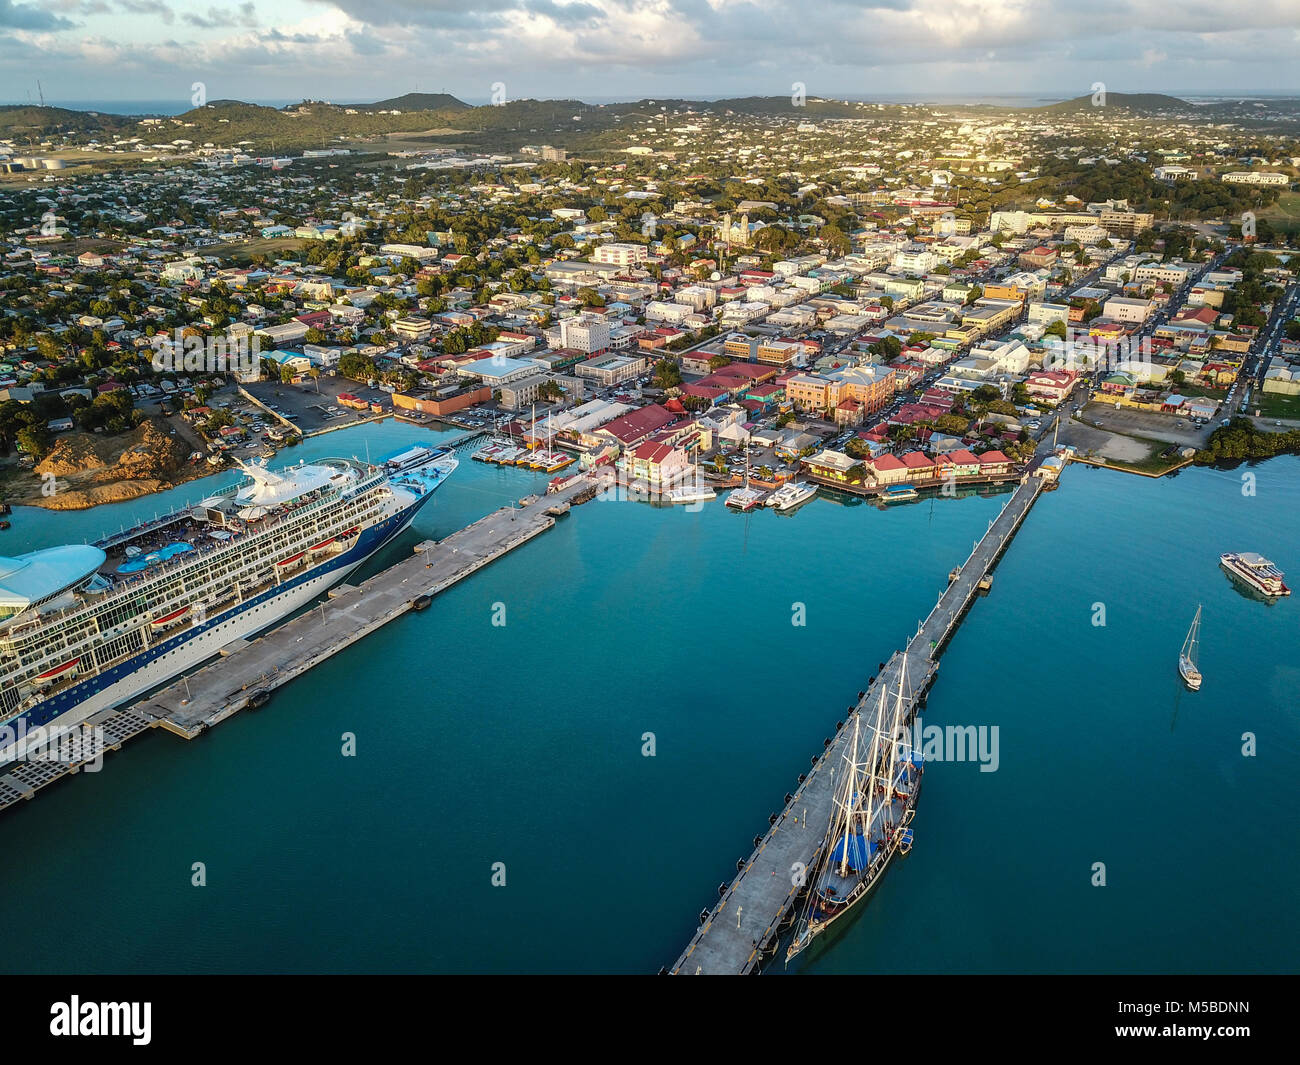 St Johns, Antigua Stock Photo